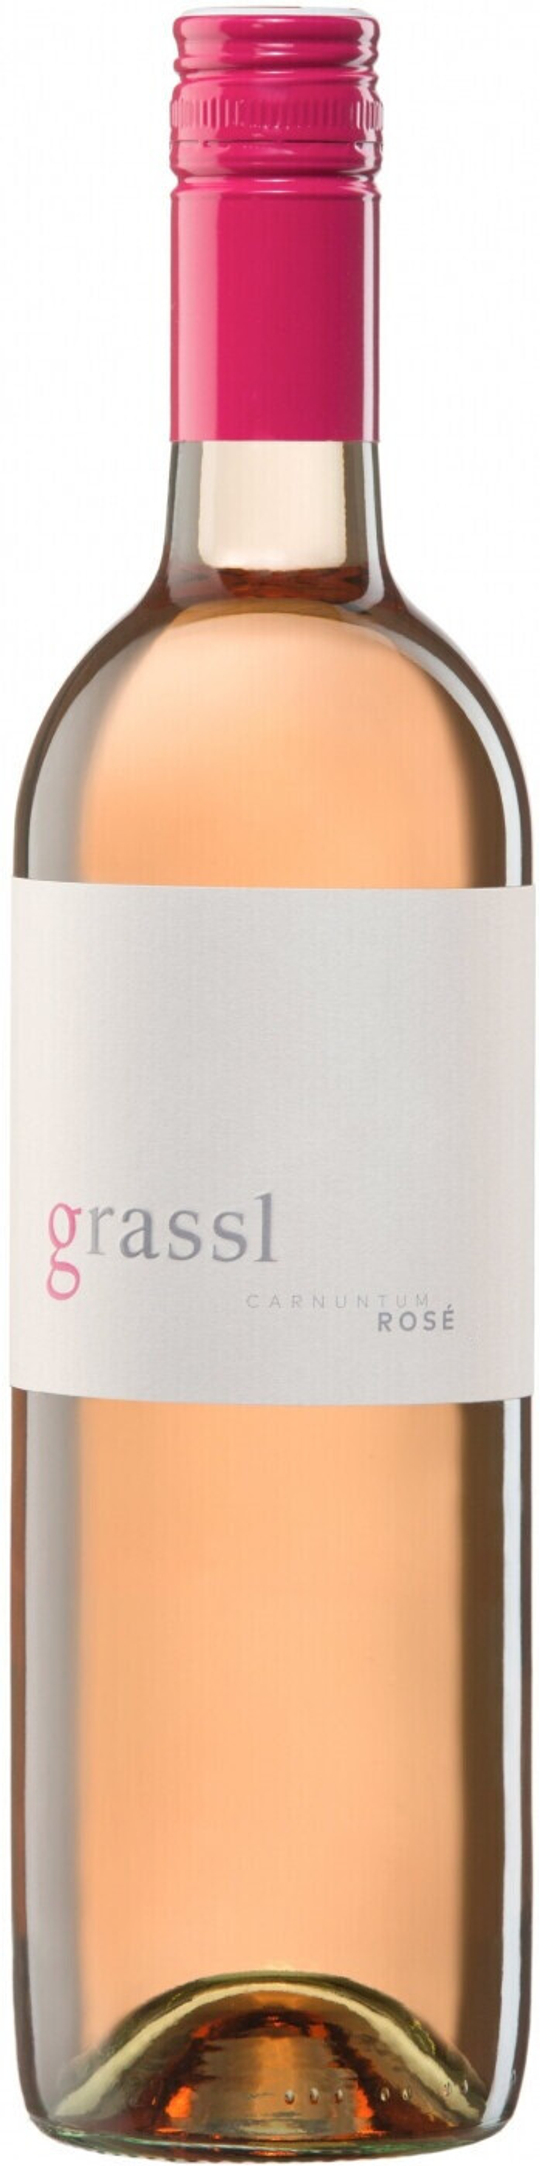 Вино Grassl Rose, 0,75 л.